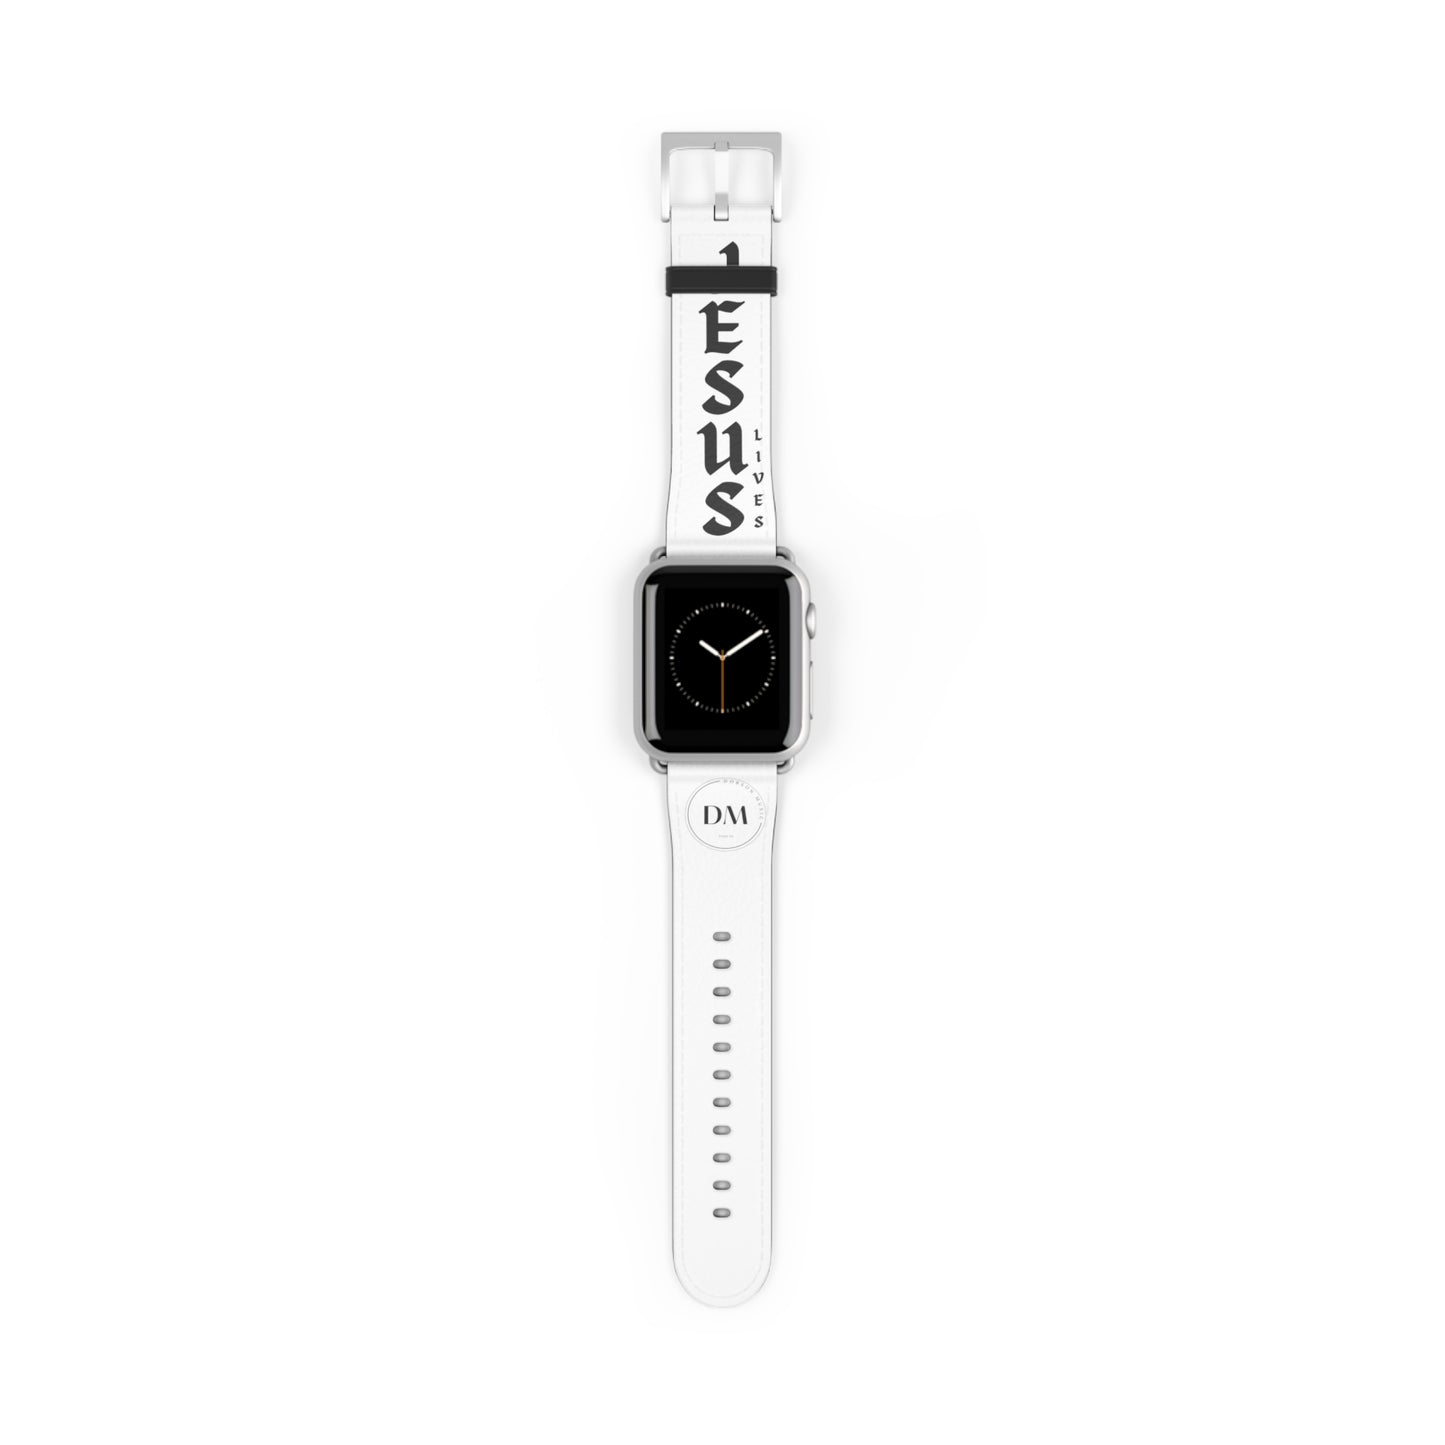 DM - Jesus Lives Apple Watch Band